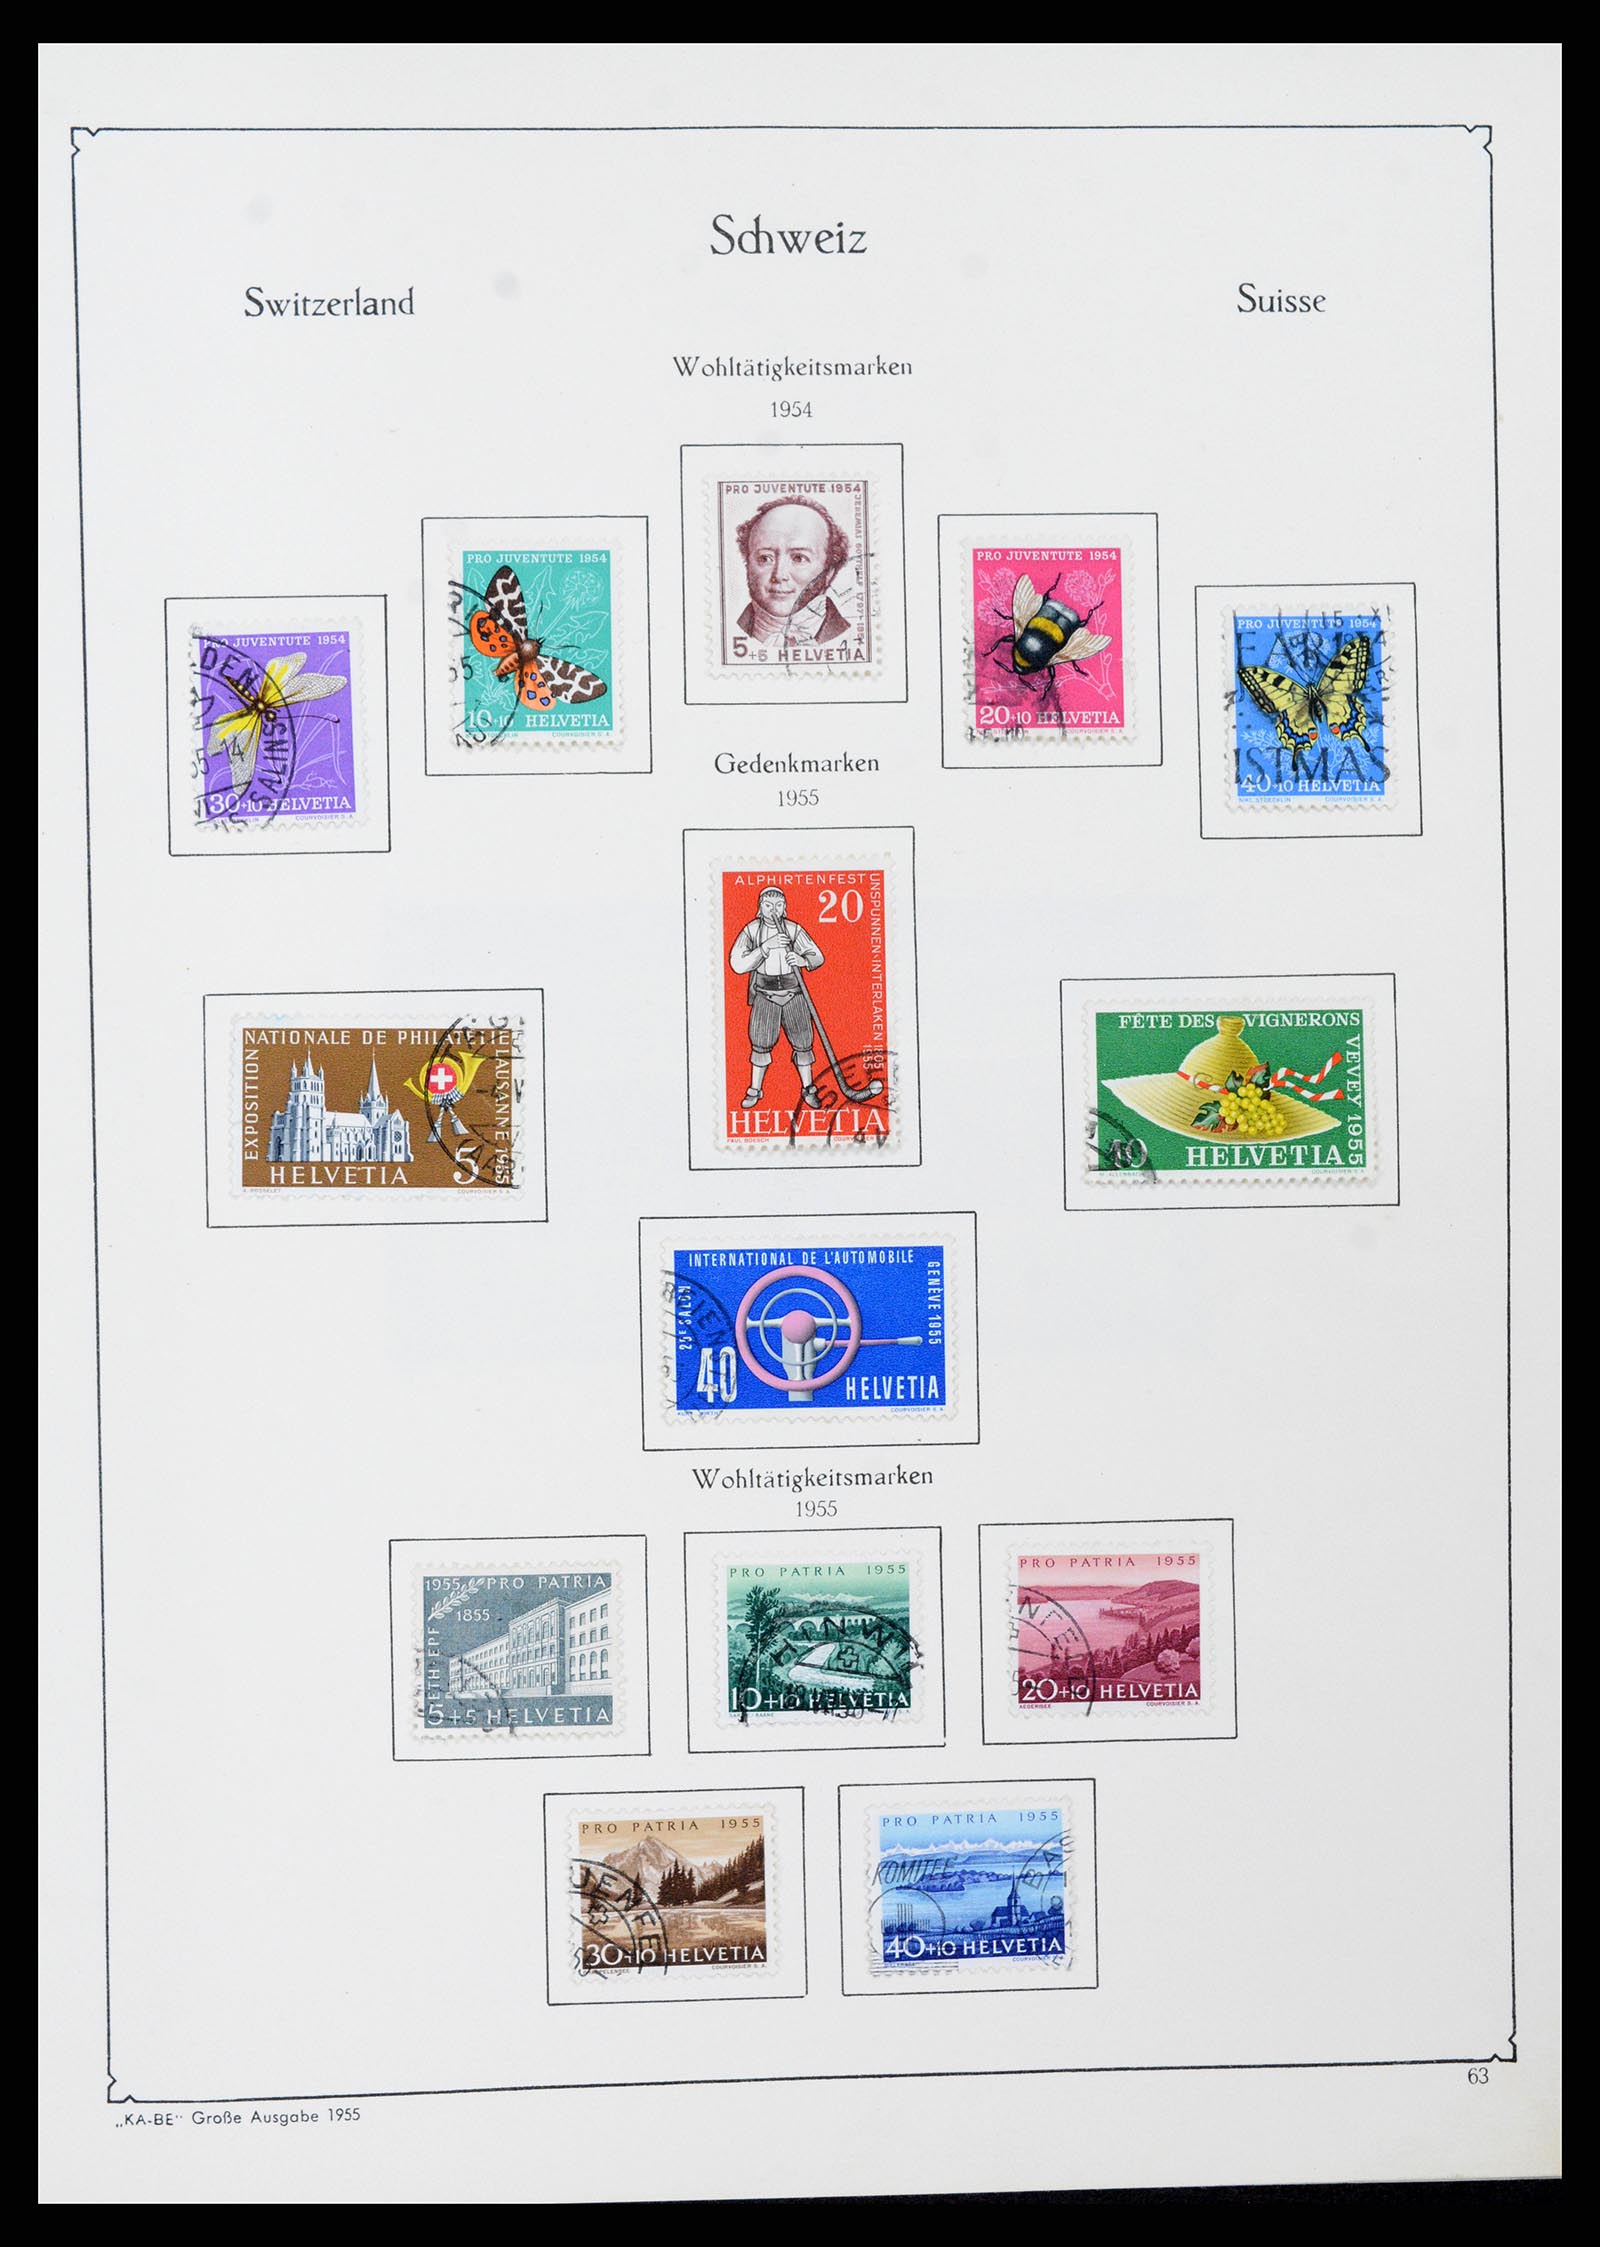 37588 059 - Stamp collection 37588 Switzerland 1854-1974.